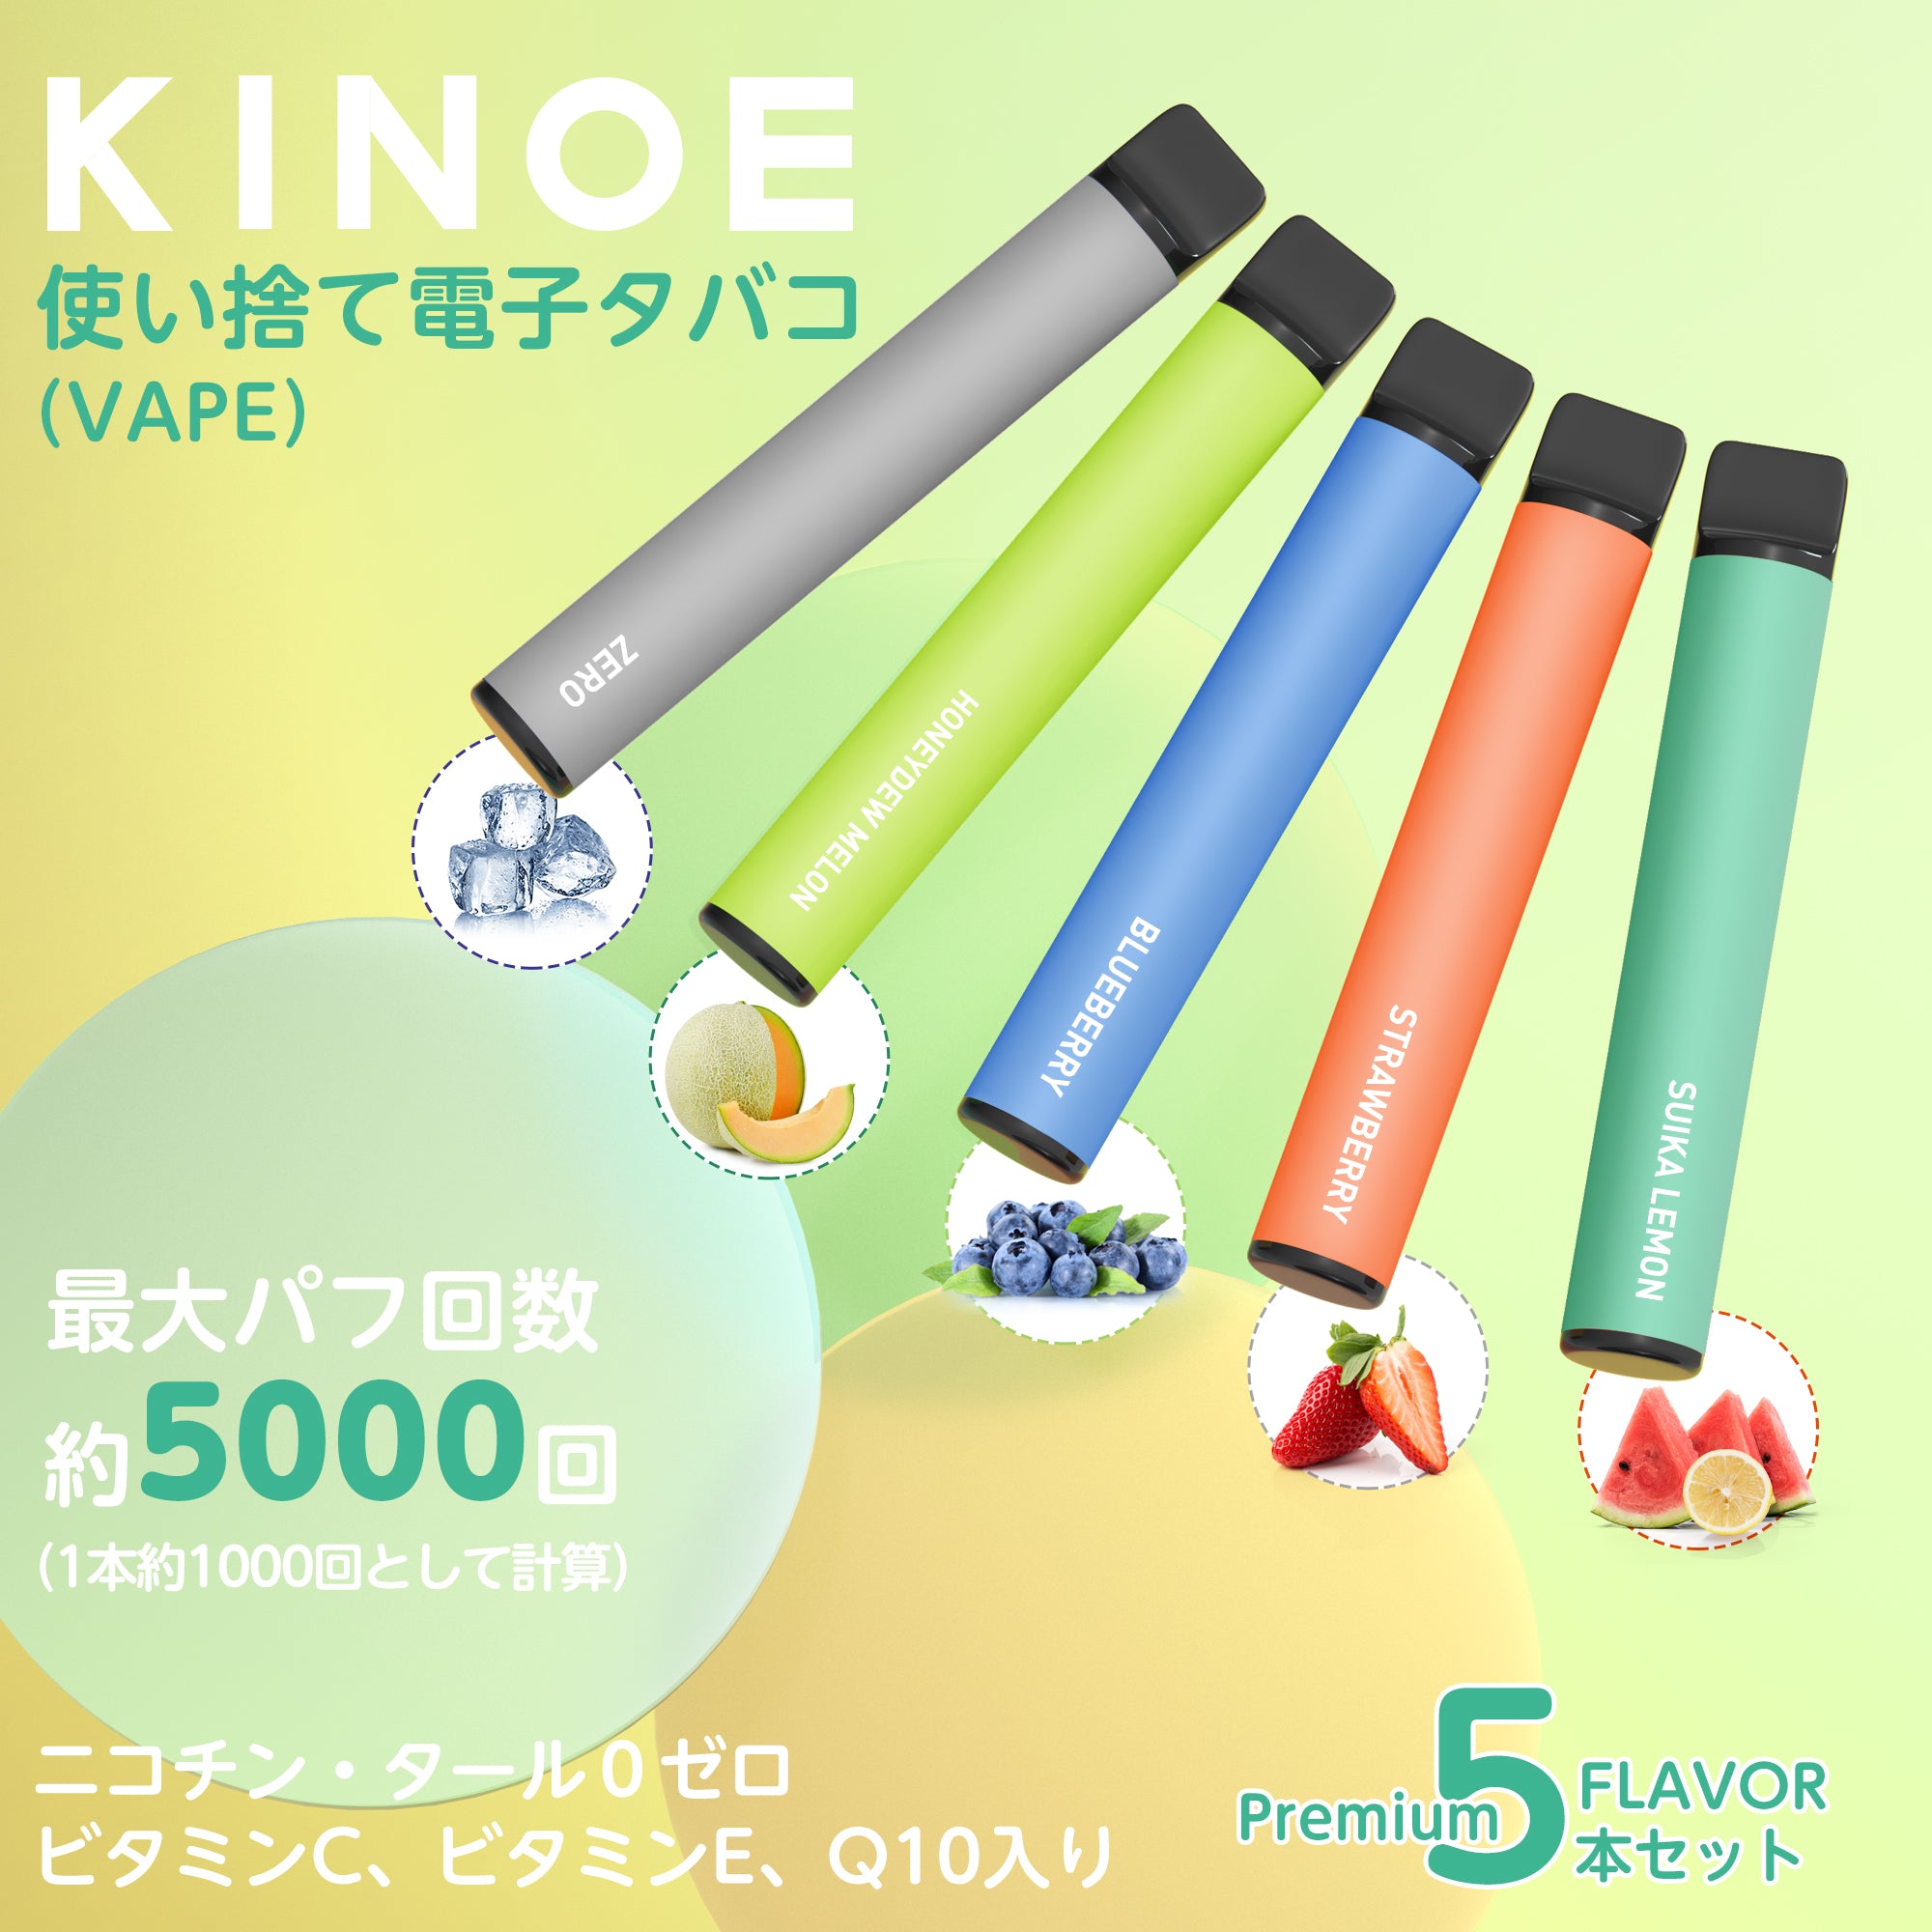 KINOE Electronic Cigarette Disposable 5 Flavors Set of 5 MIX 2